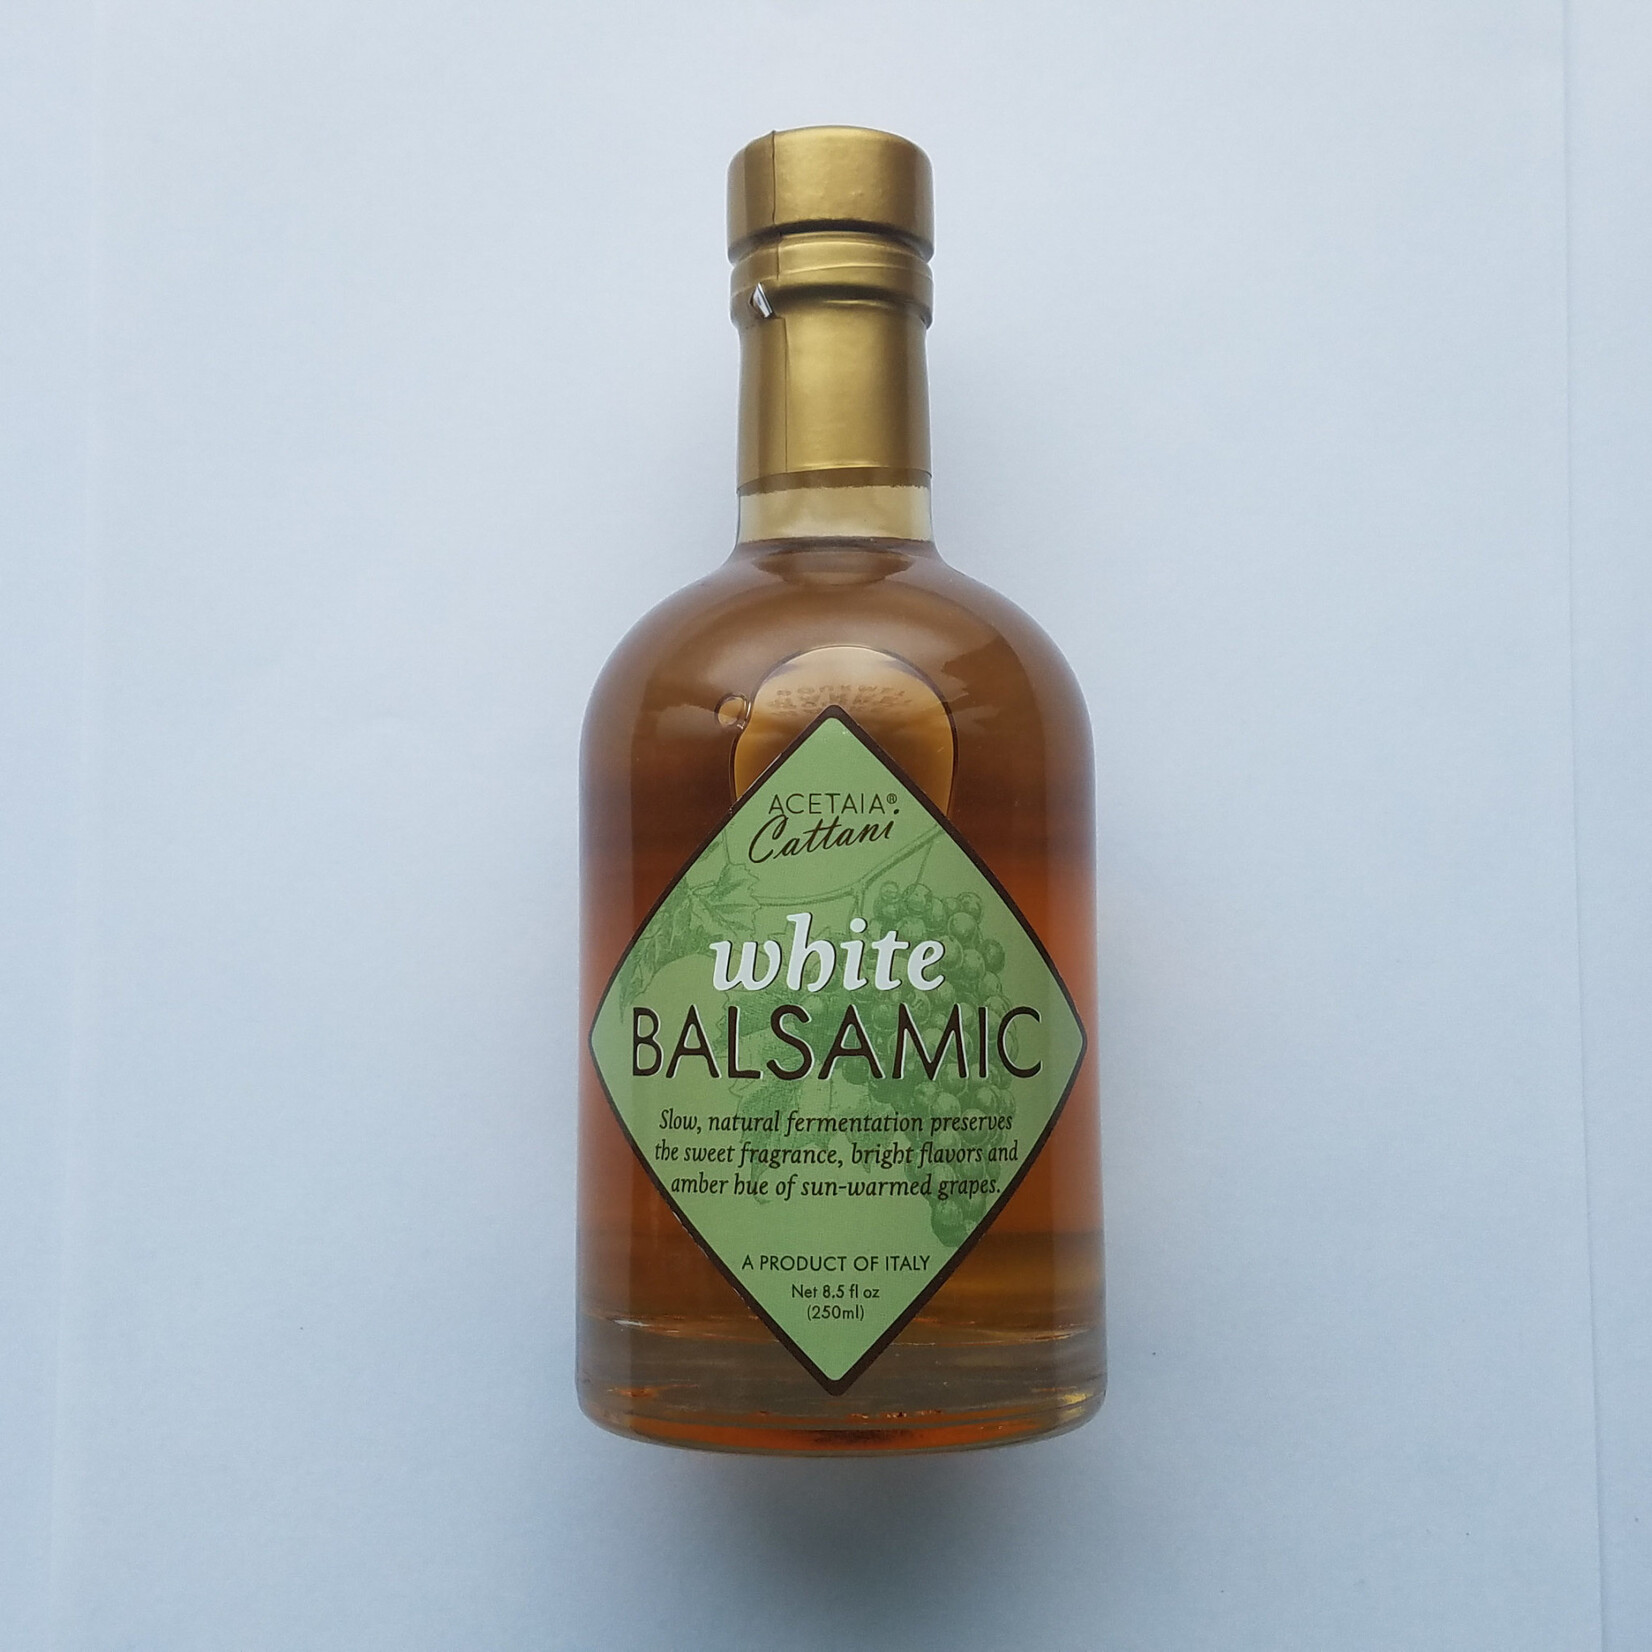 Great Ciao Acetaia Cattani White Balsamic Vinegar, Italy, 250ml